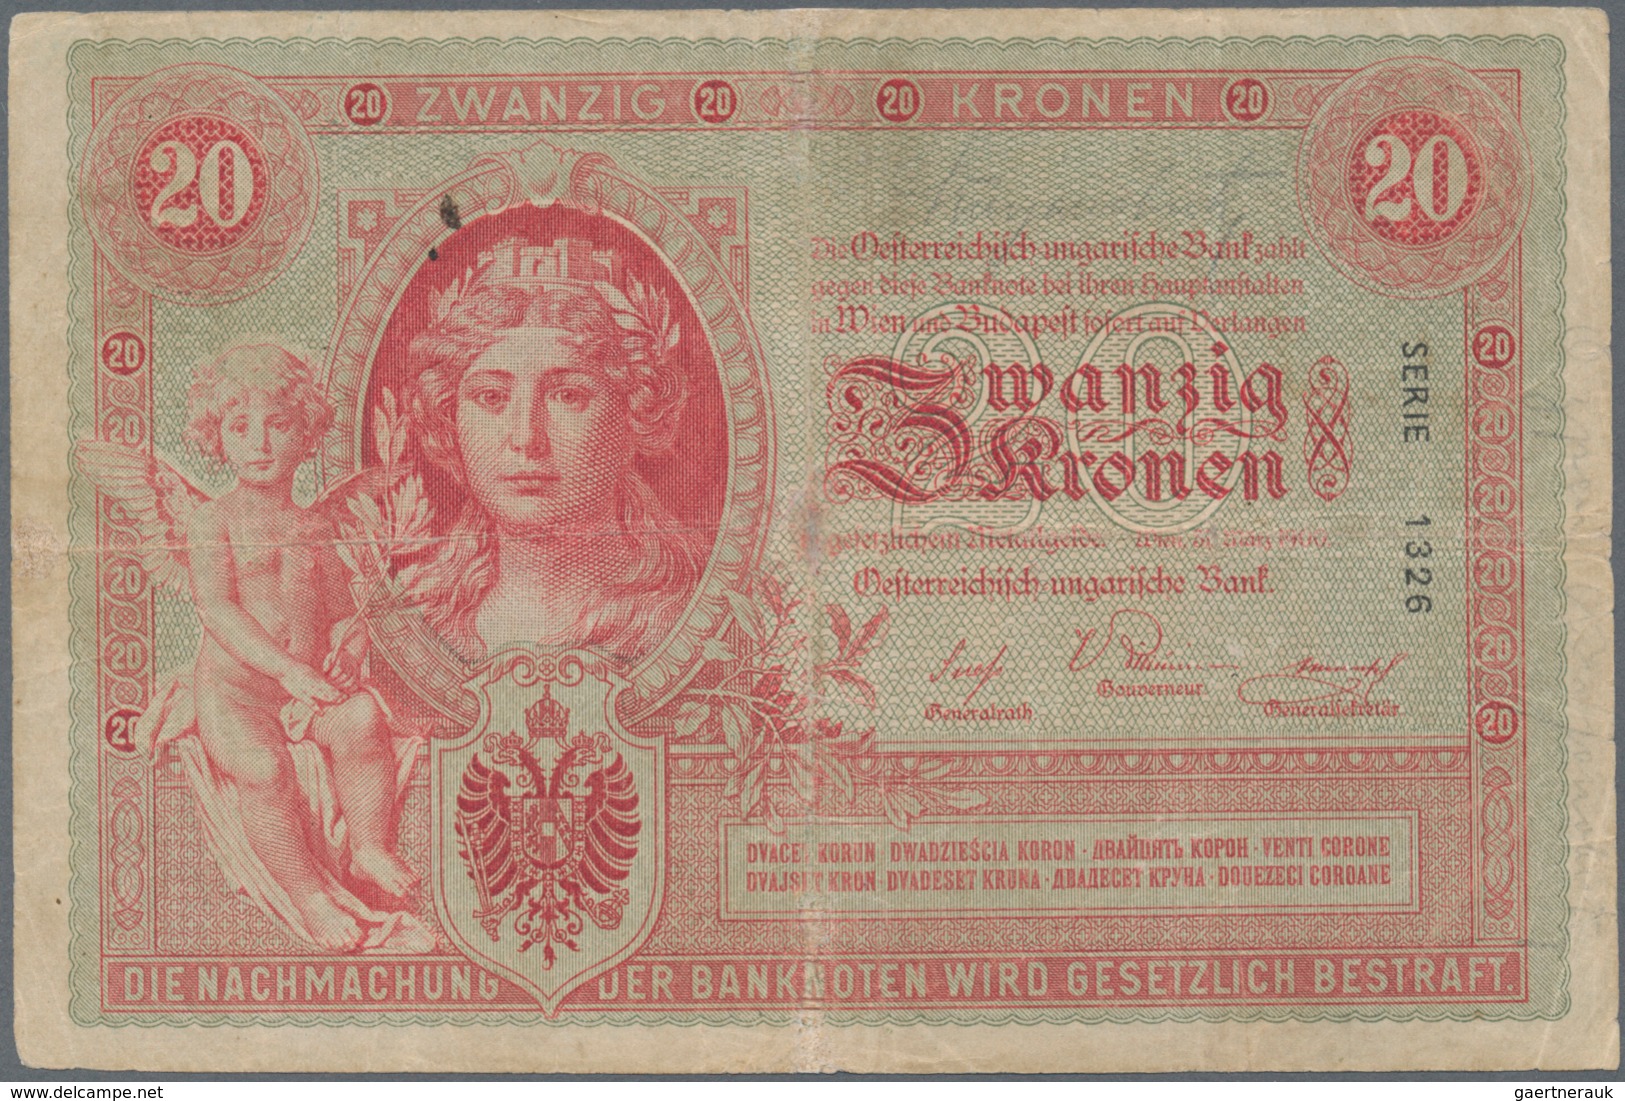 Austria / Österreich: 20 Kronen 1900, P.5, Very Popular And Rare Note In Nice Condition, Toned Paper - Austria